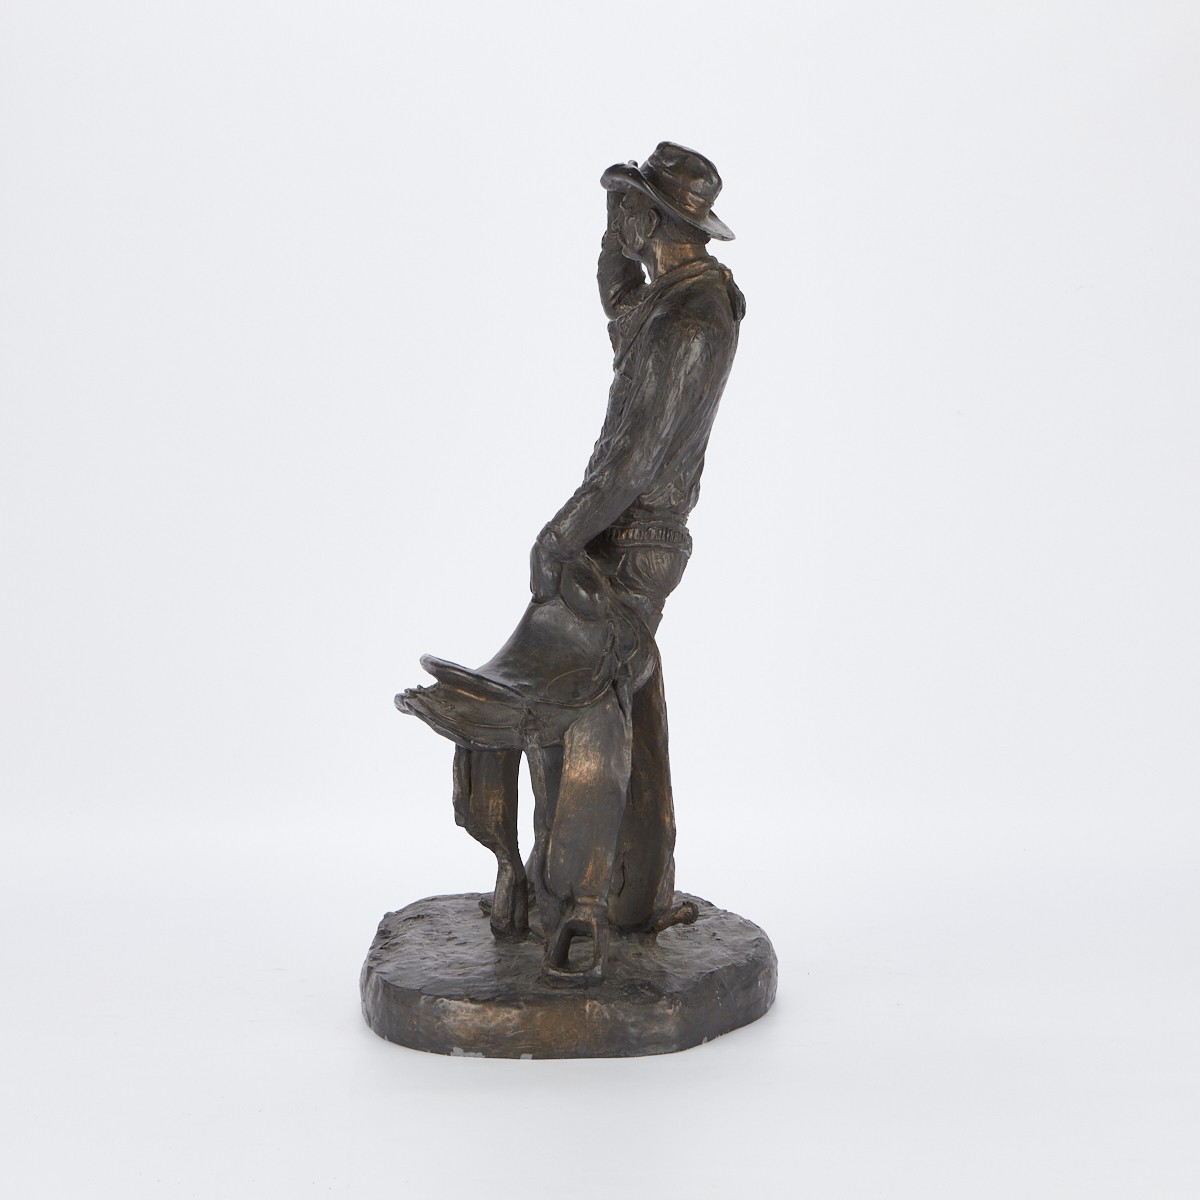 Michael Garman "Saddle Tramp" Cold Cast Bronze Sculpture - Image 3 of 6